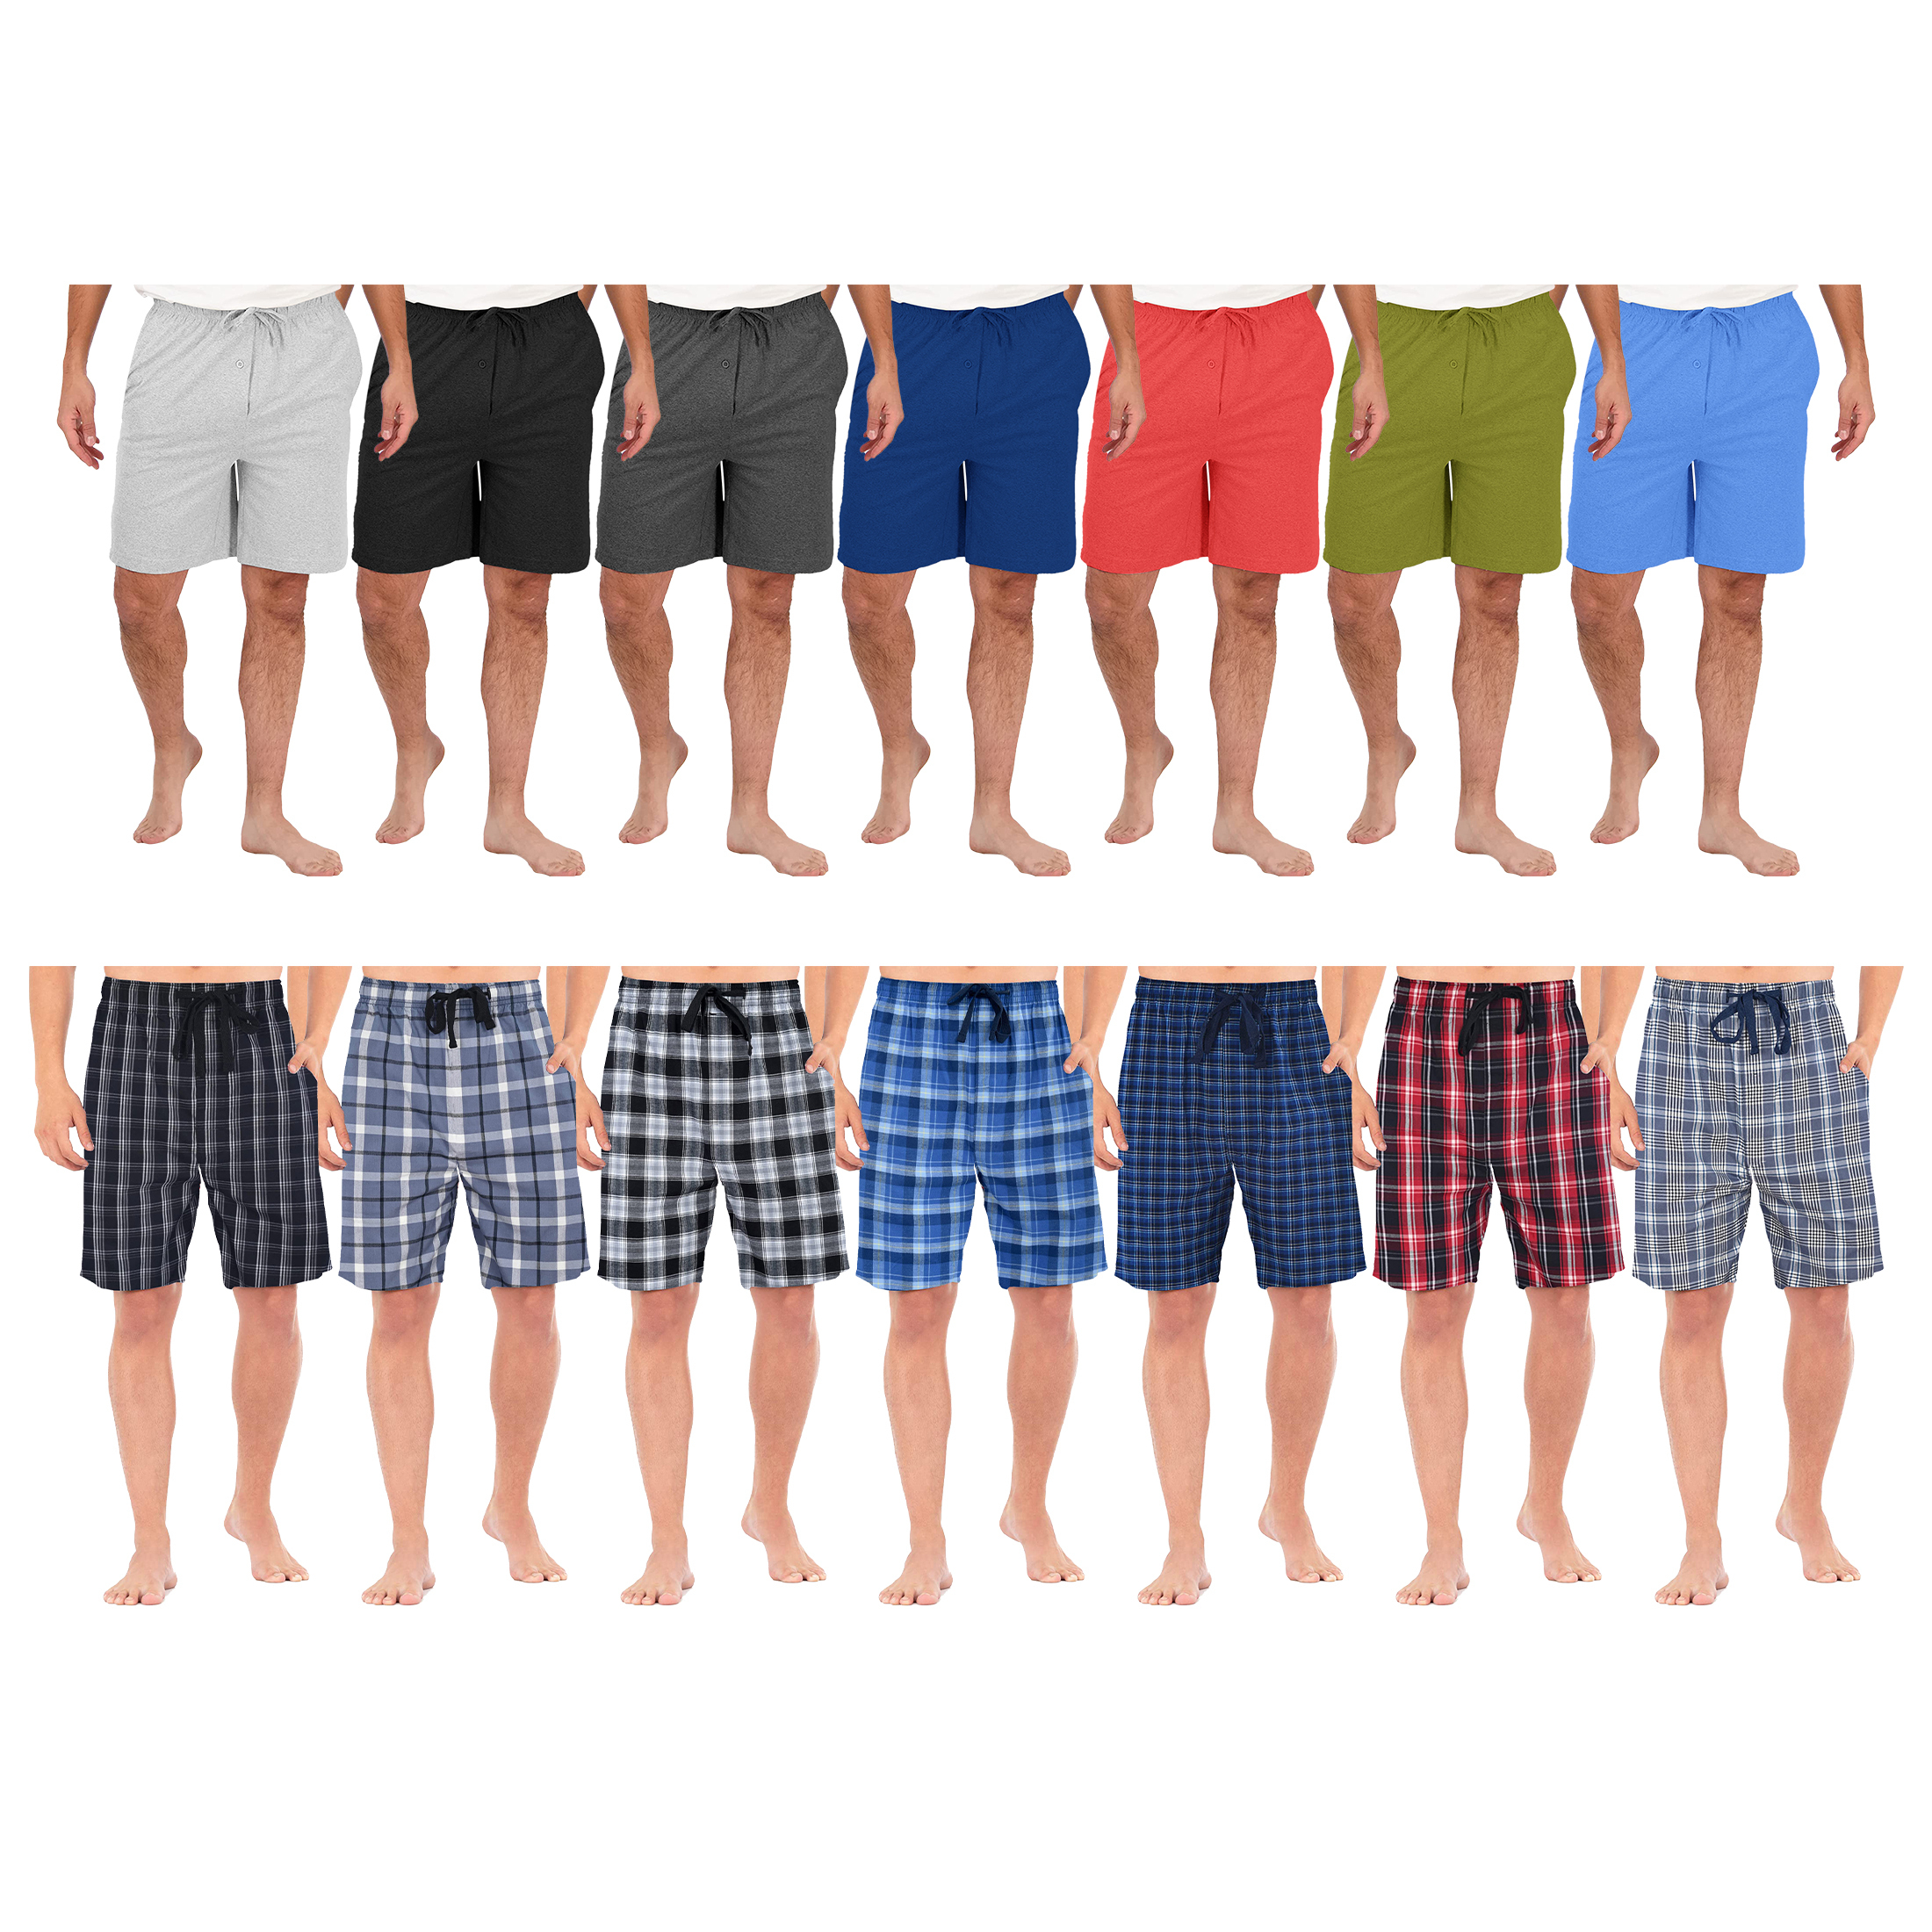 Multi-Pack: Men's Ultra-Soft Jersey Knit Sleep Lounge Pajama Shorts For Sleepwear - Plaid, 3 Pack, Large